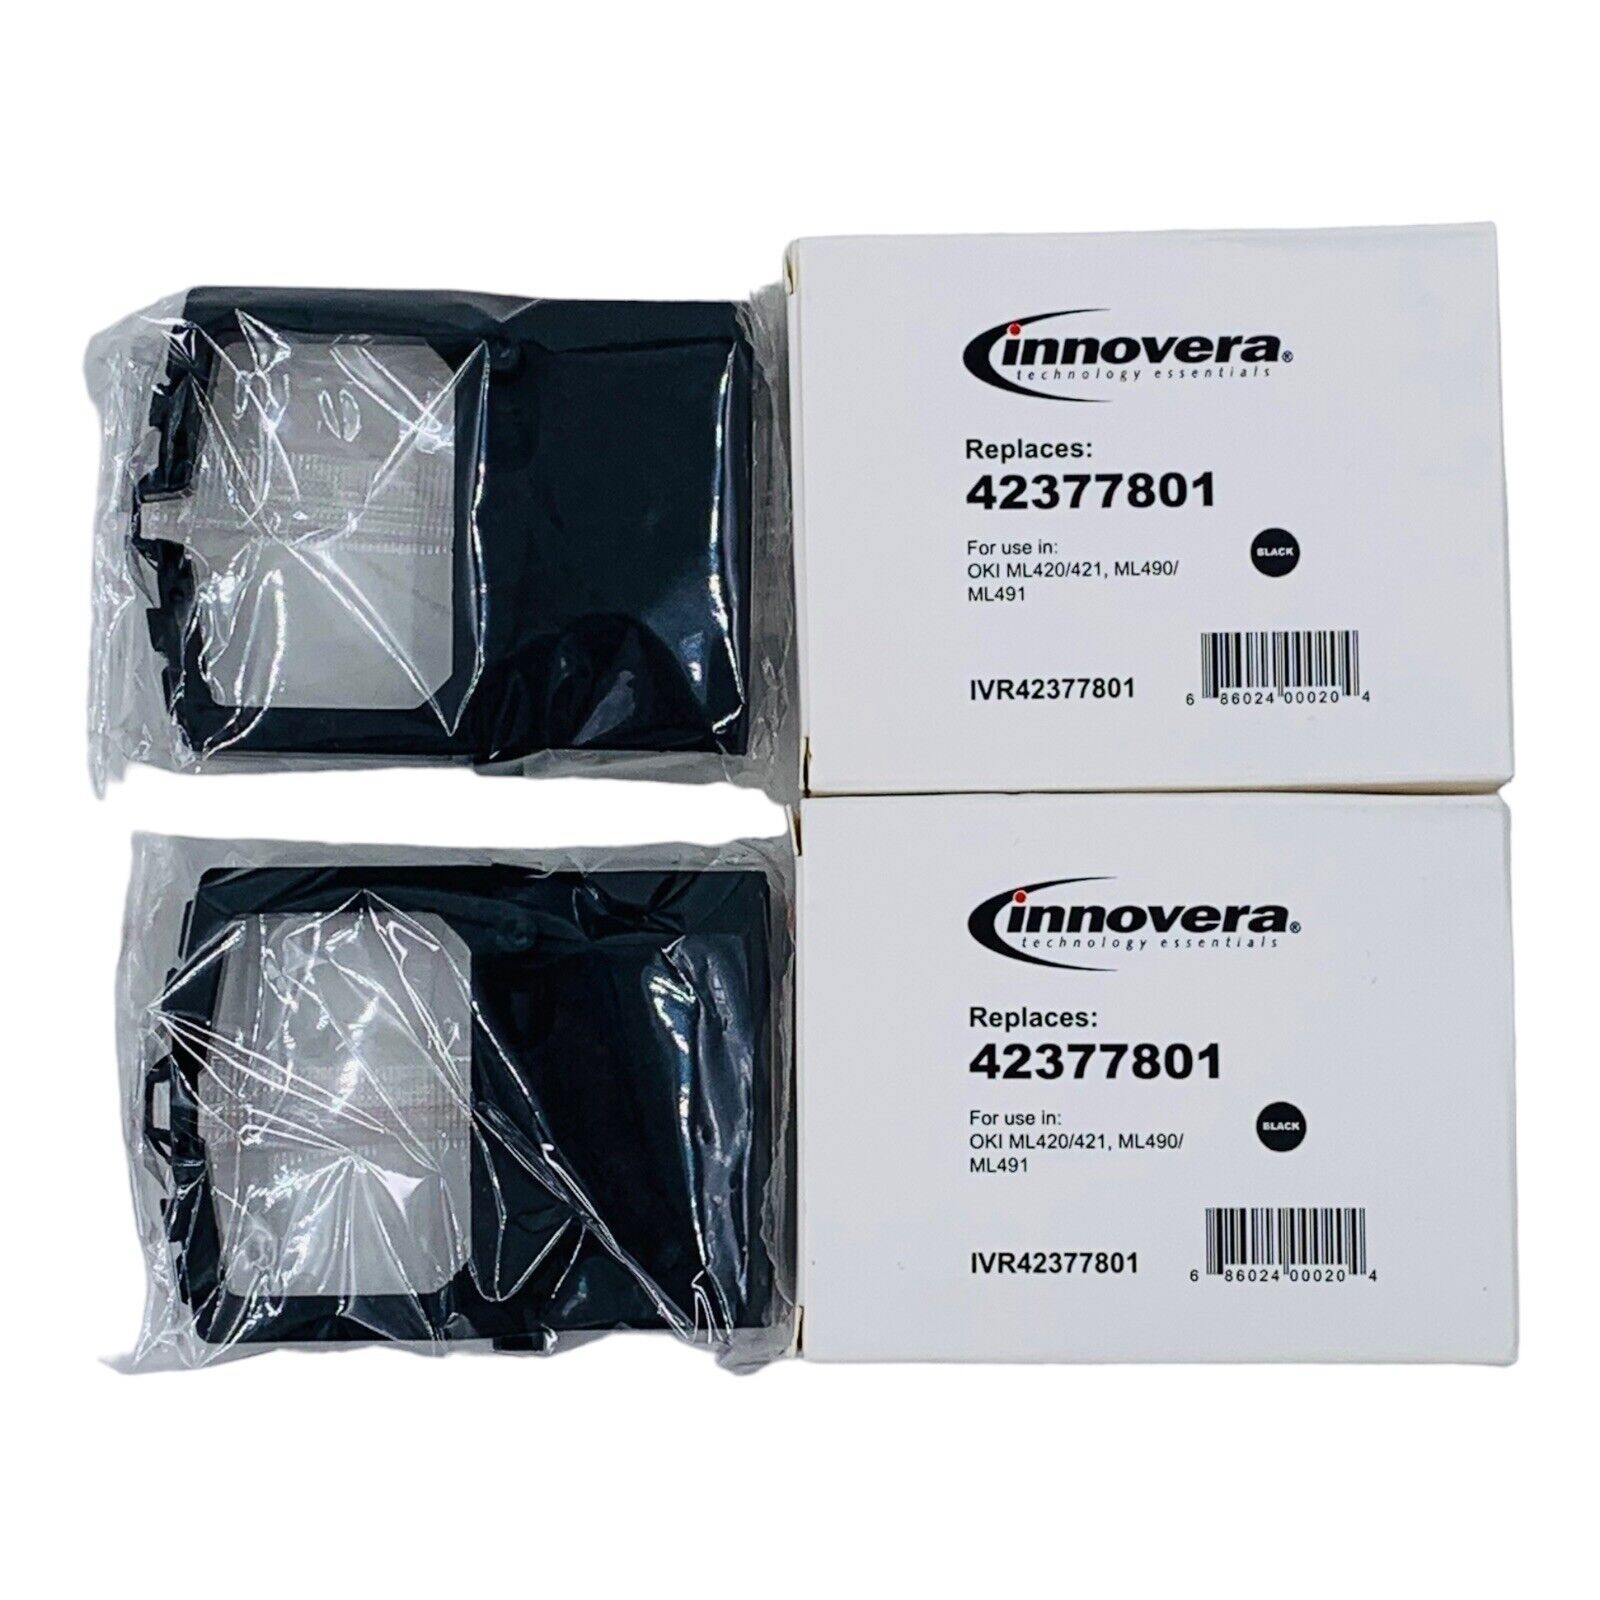 2 Count Innovera Black Printer Ribbon for OKI ML420/421, ML490/ML491